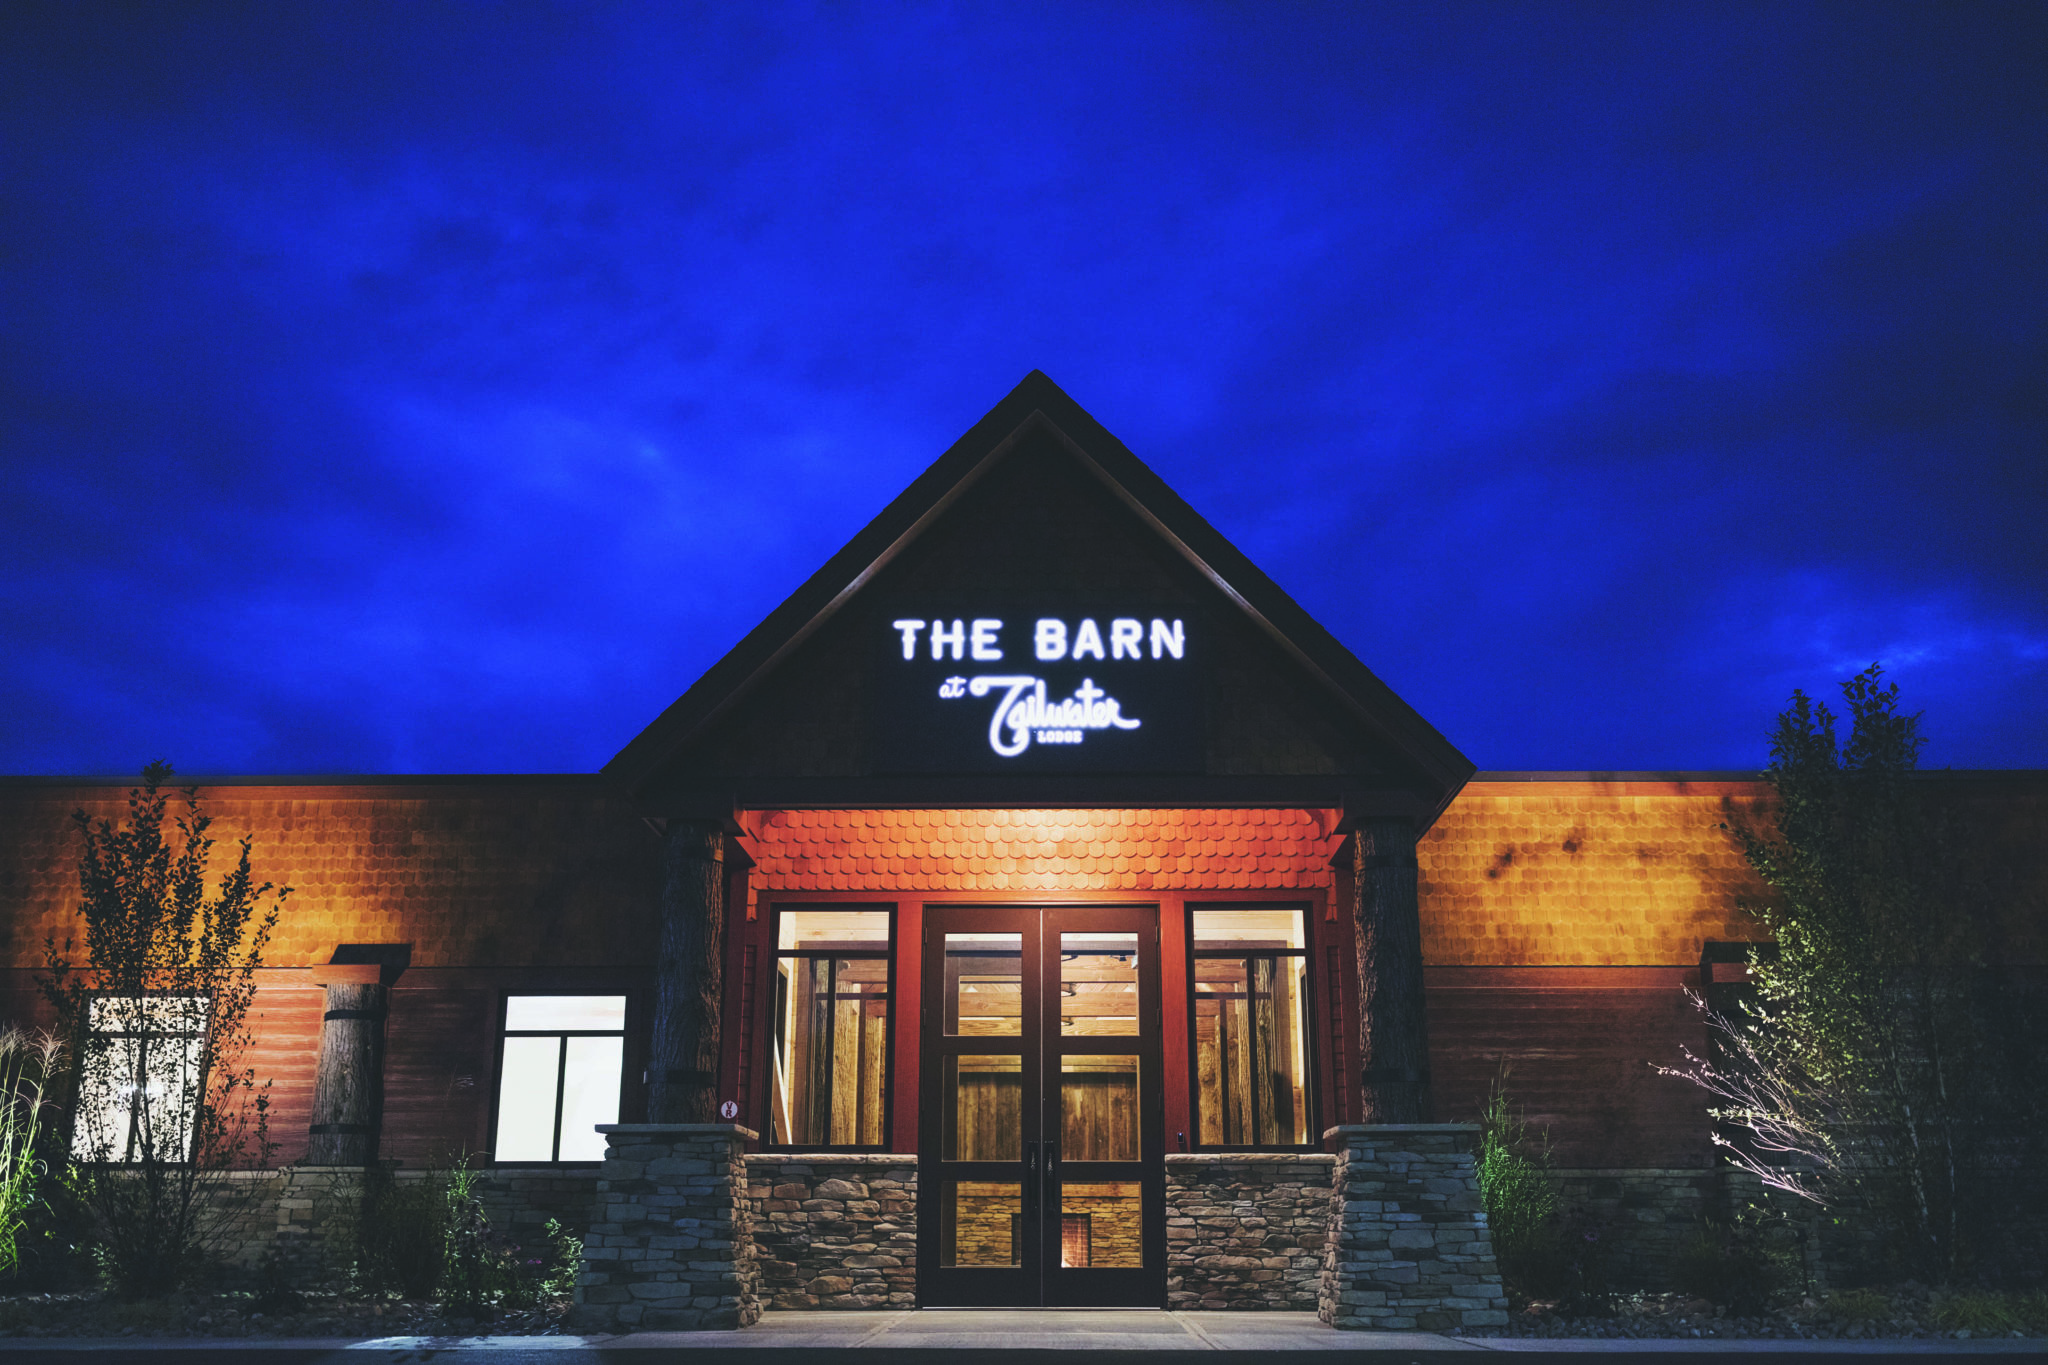 The Barn exterior